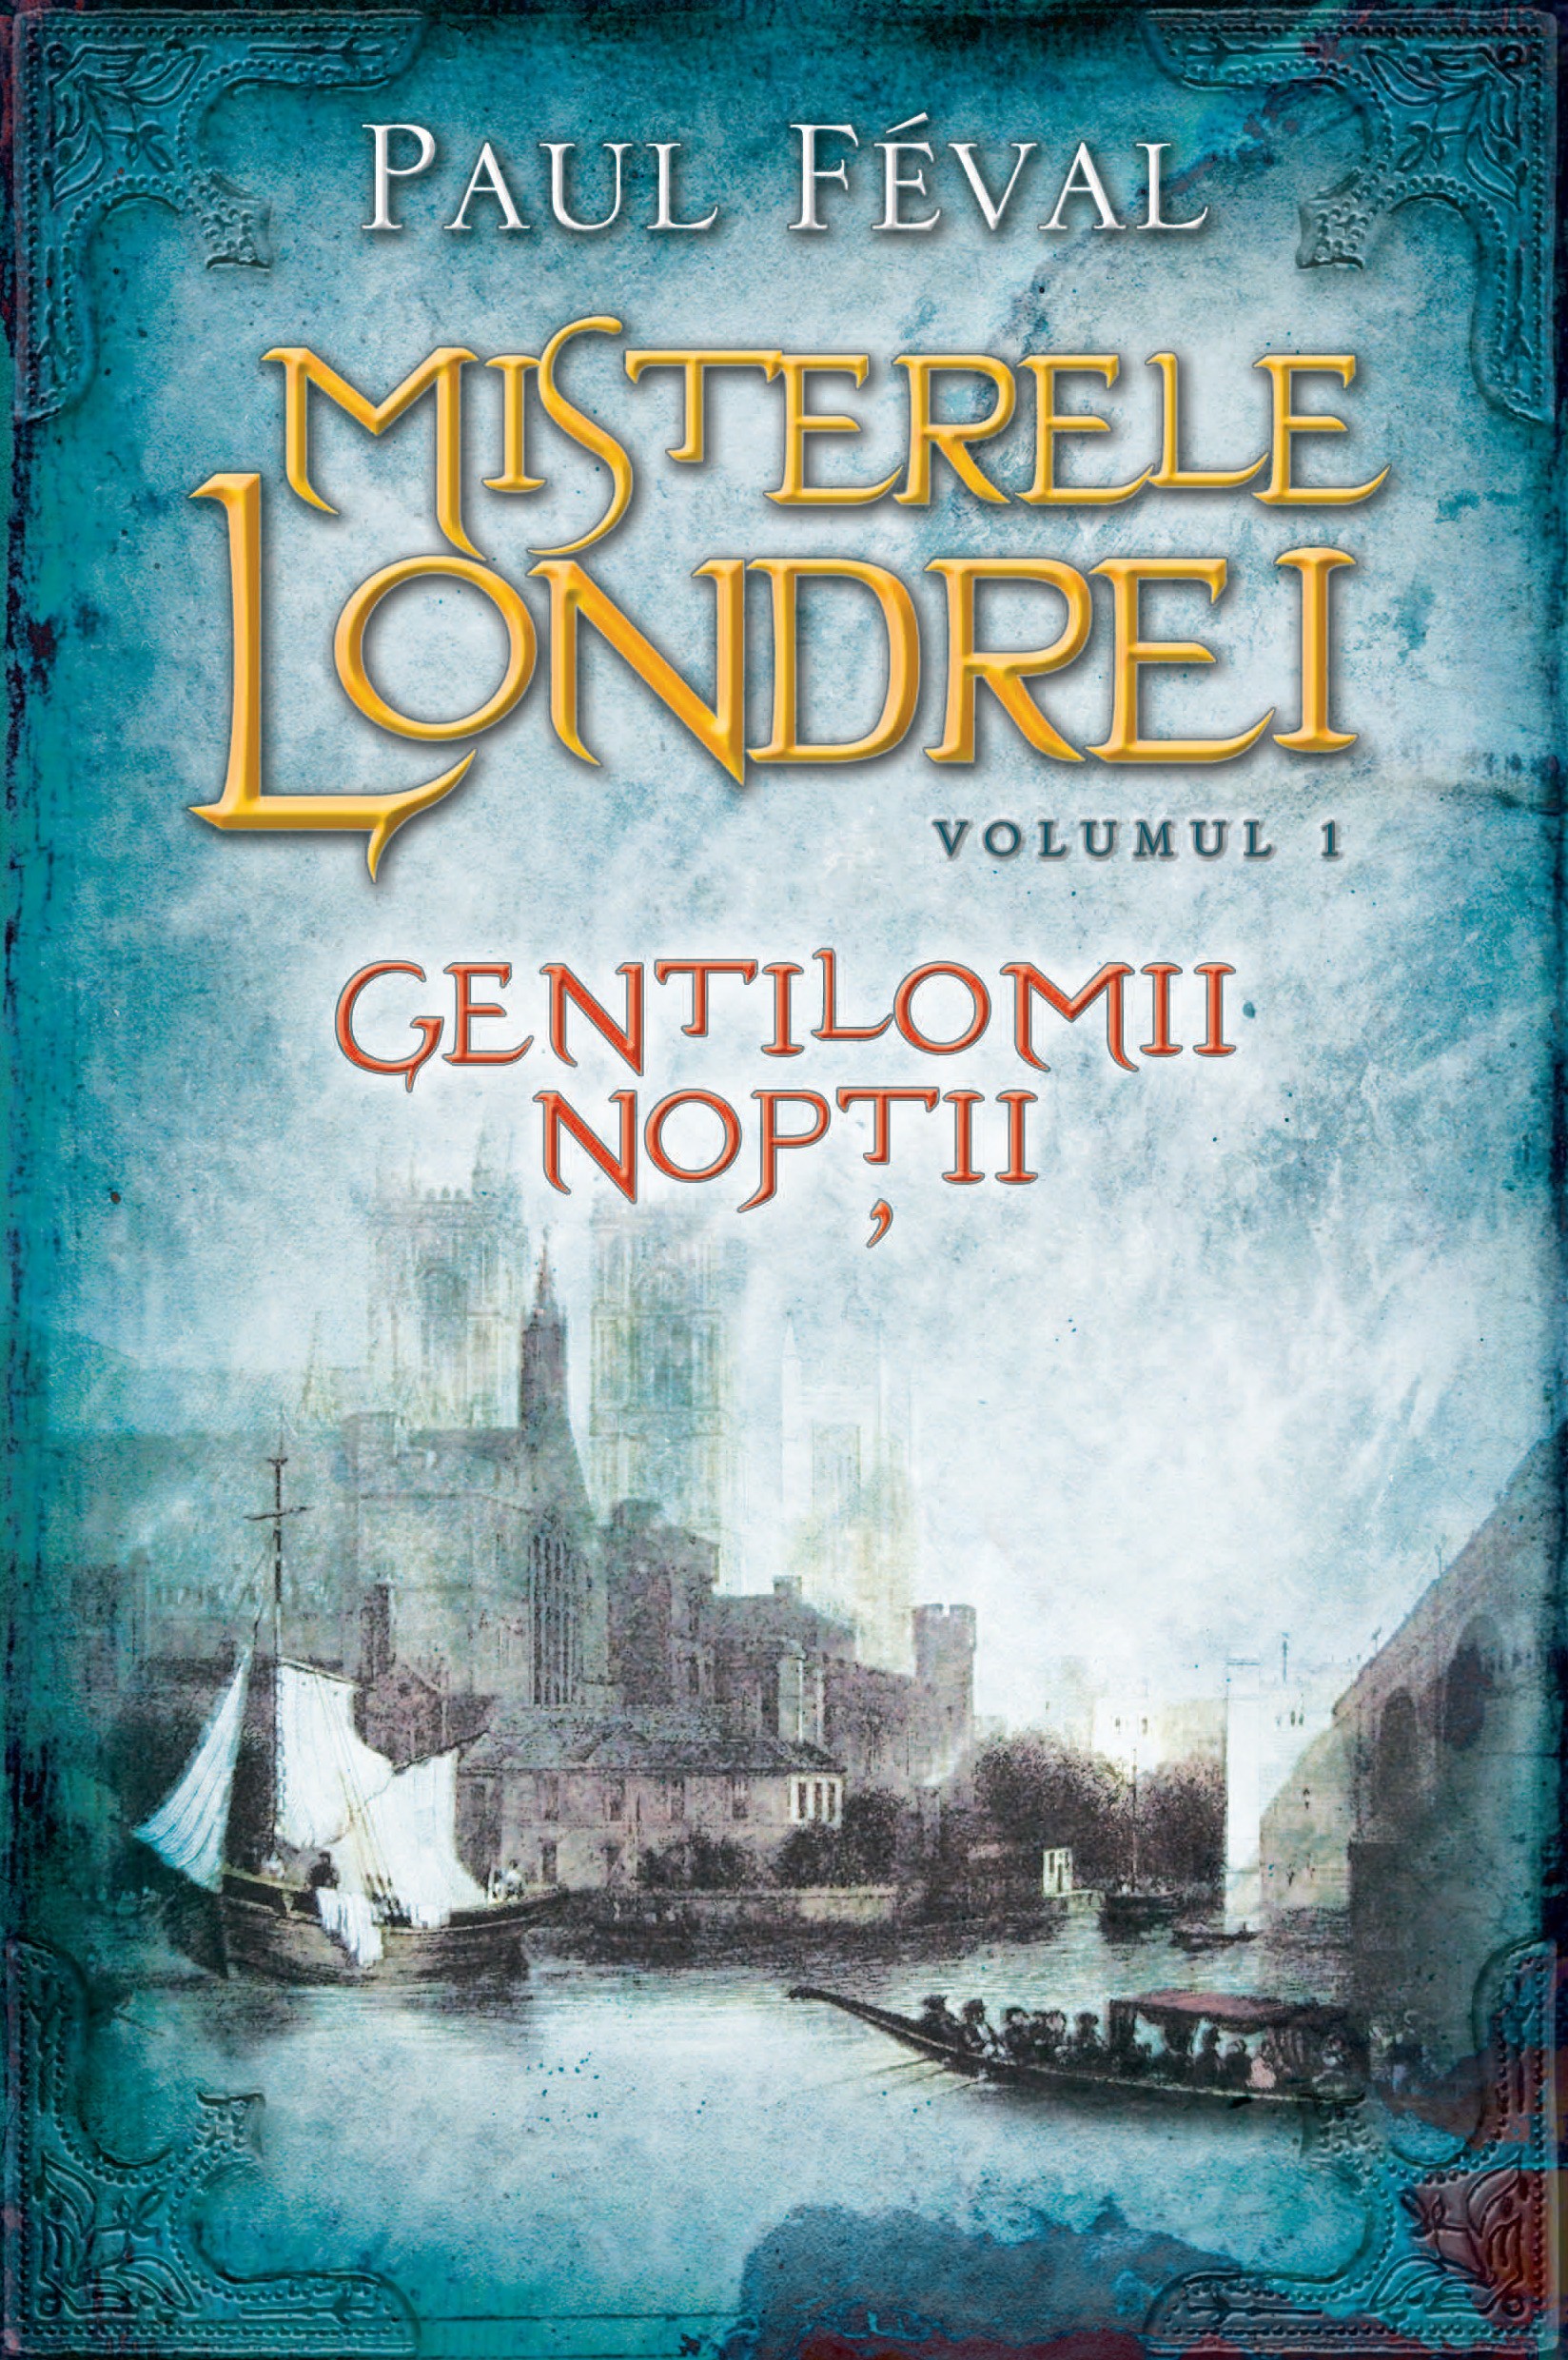 Misterele Londrei. Gentilomii noptii  - Vol. I - Paul Feval